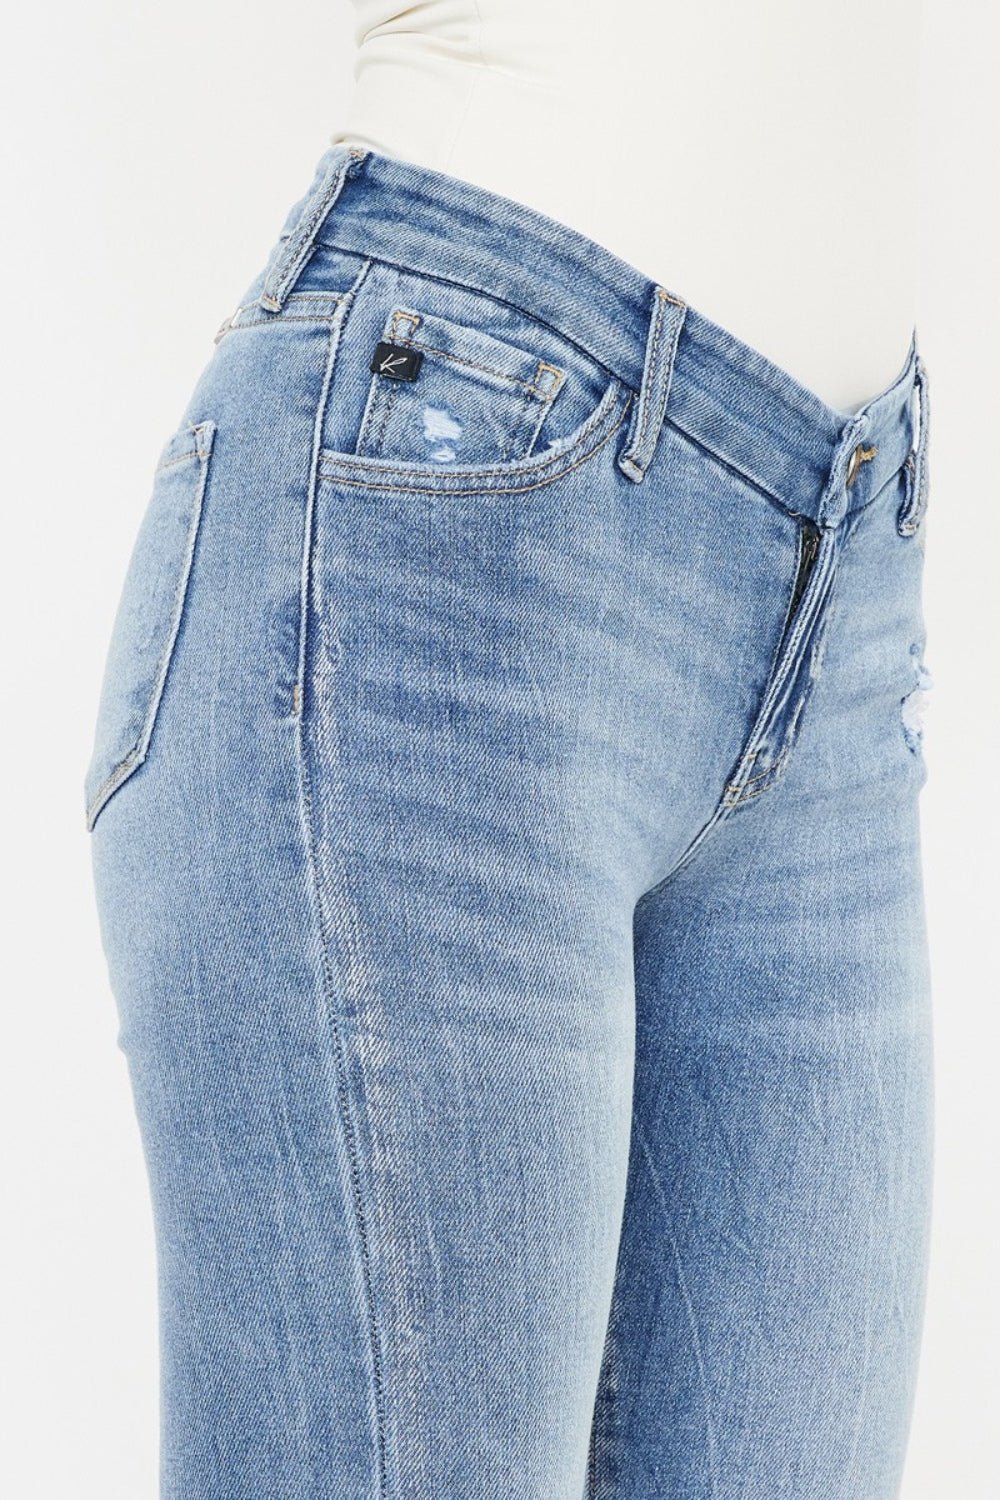 Medium Wash High Waist Distressed Skinny JeansJeansKancan